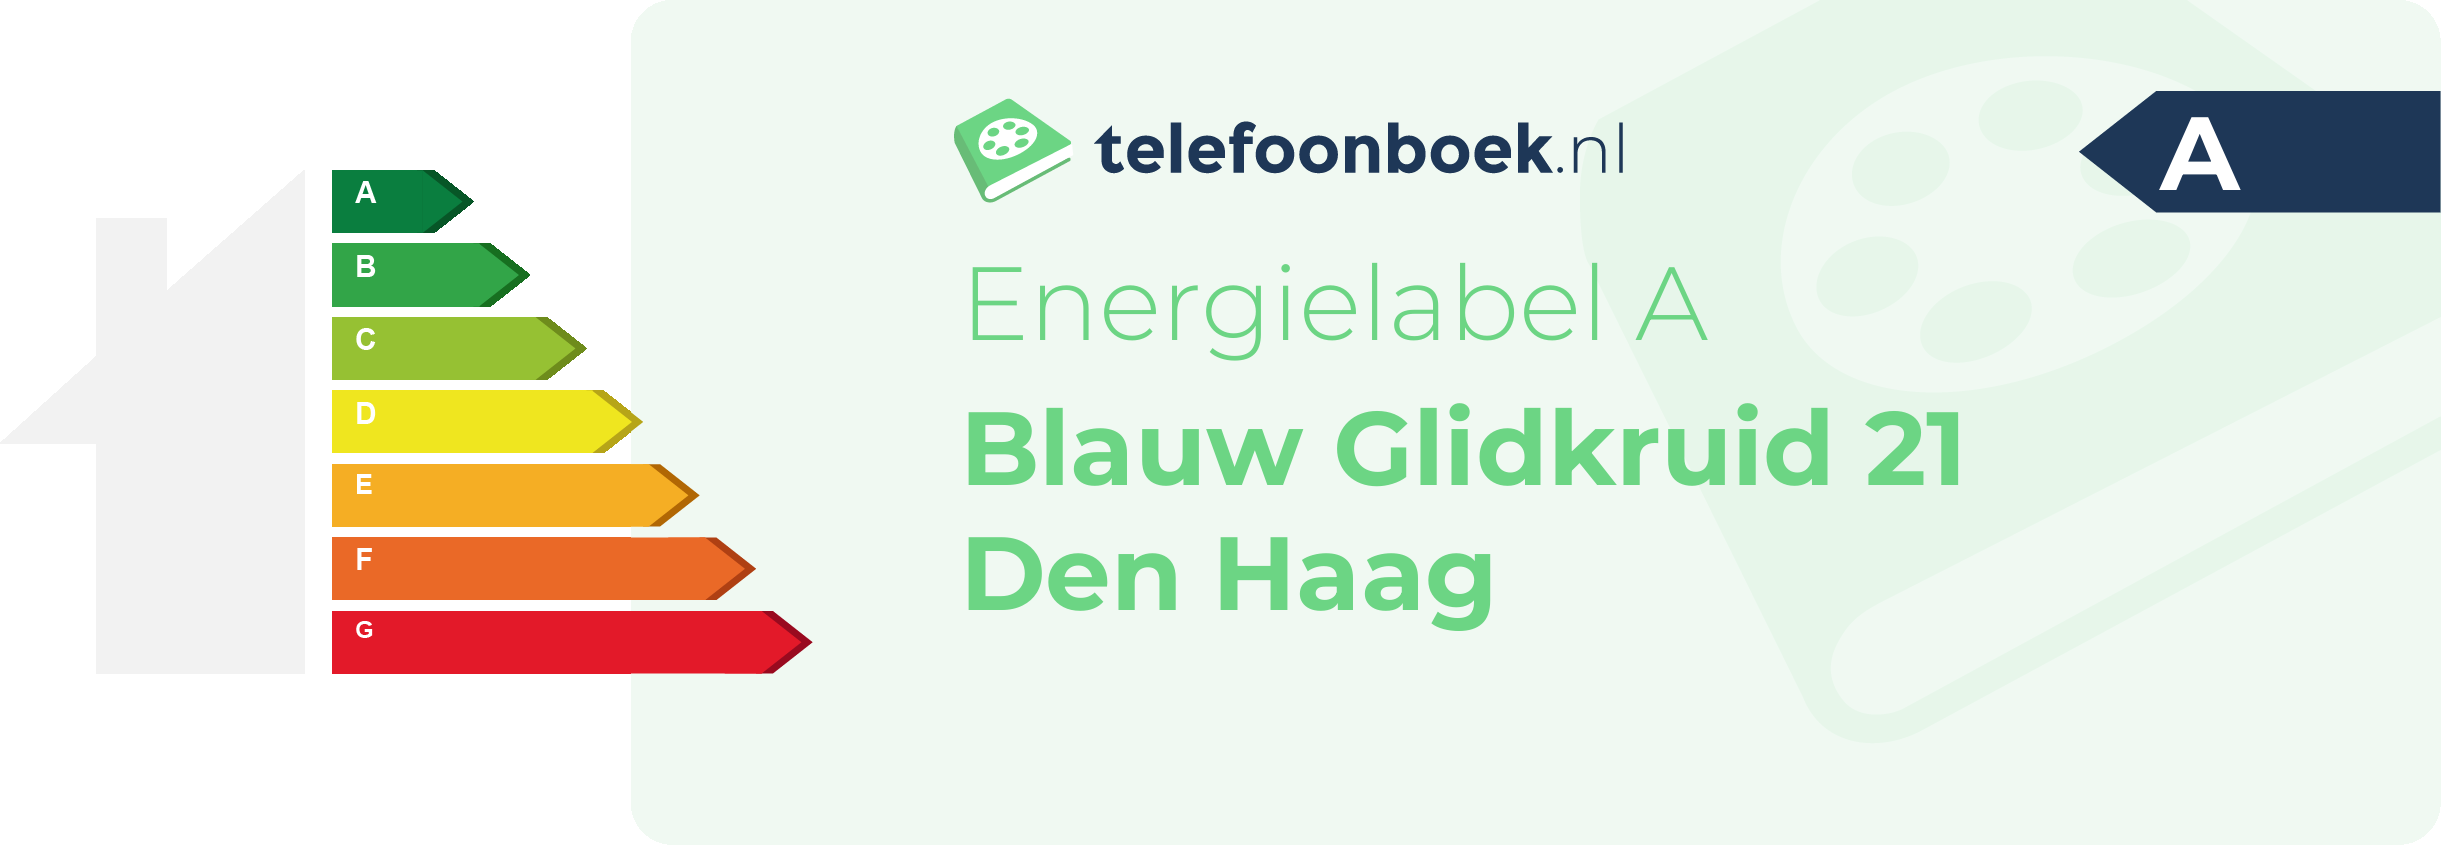 Energielabel Blauw Glidkruid 21 Den Haag